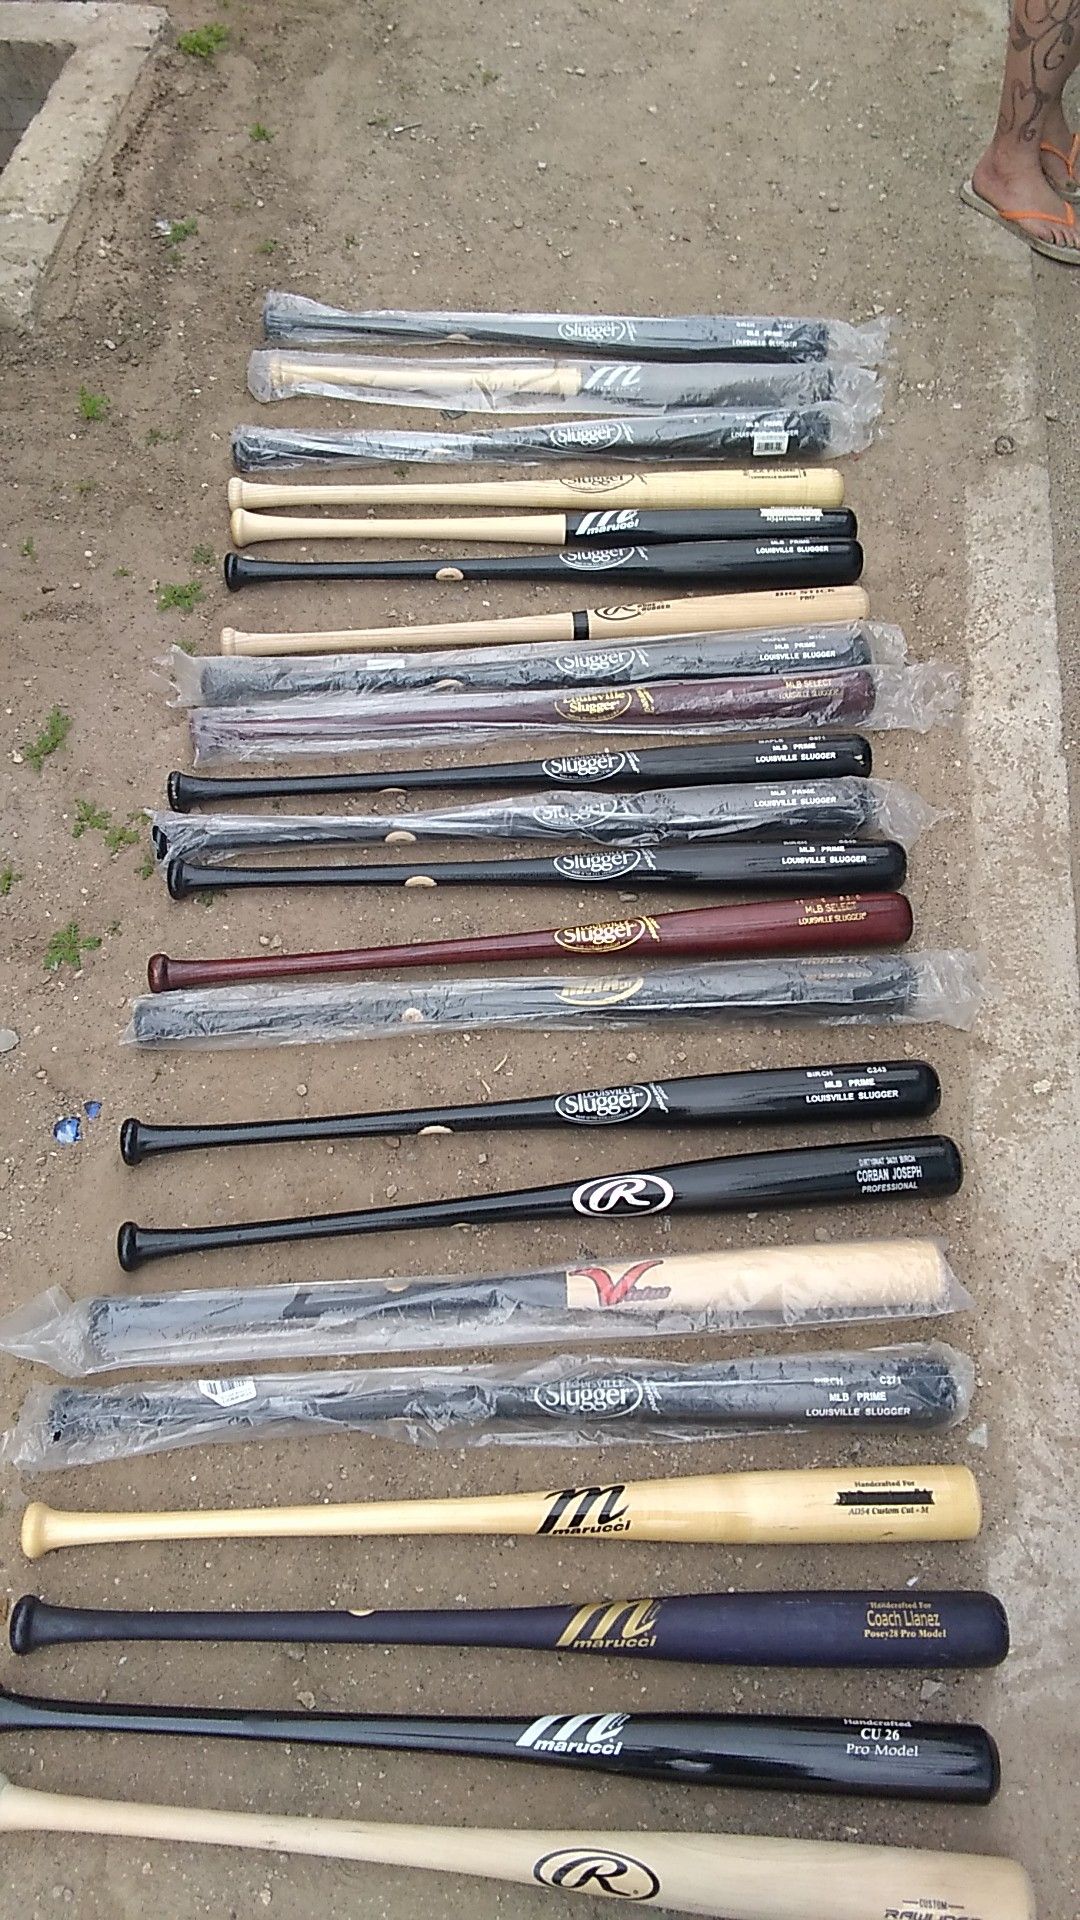 22 brand new baseball bats